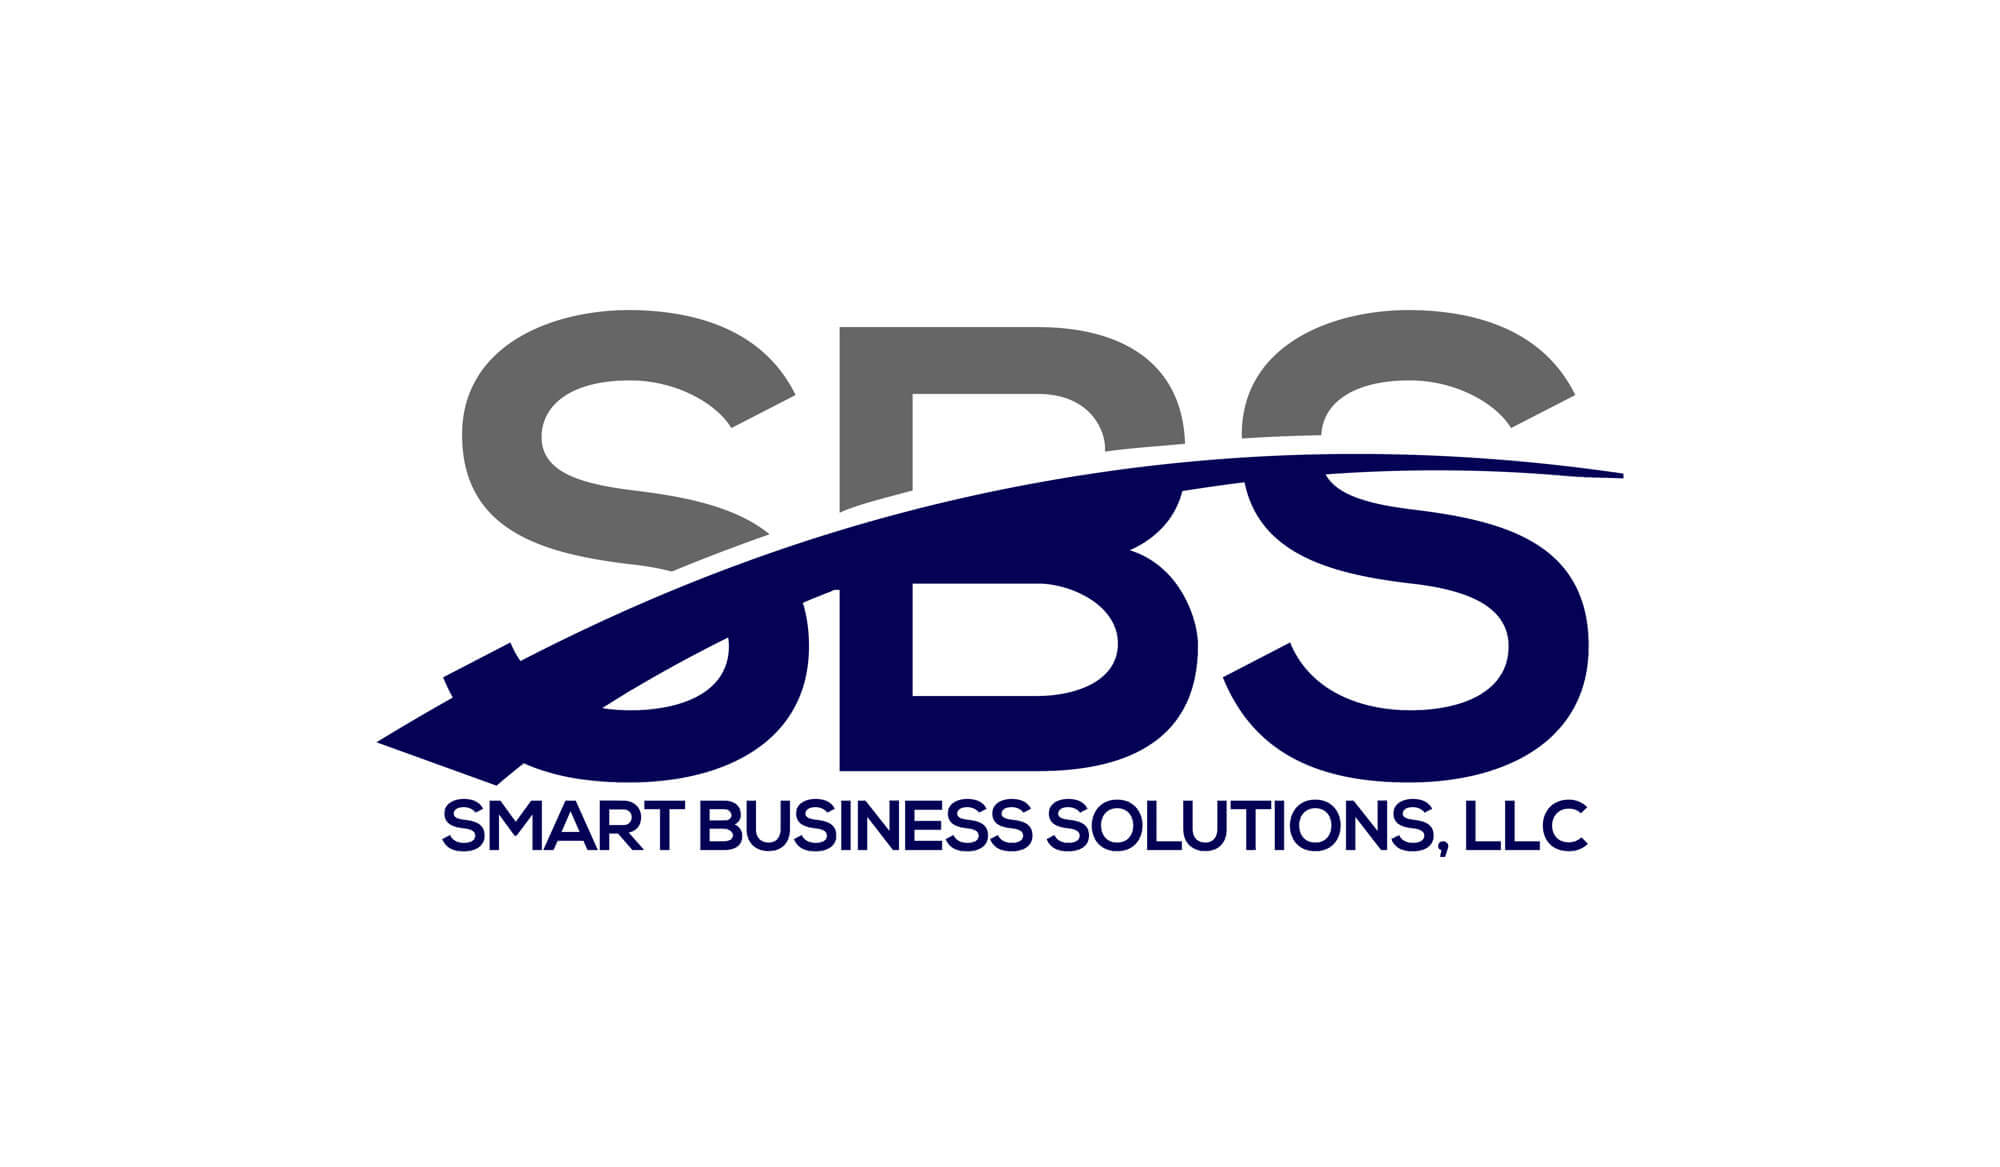 Smart Business Solutions, LLC